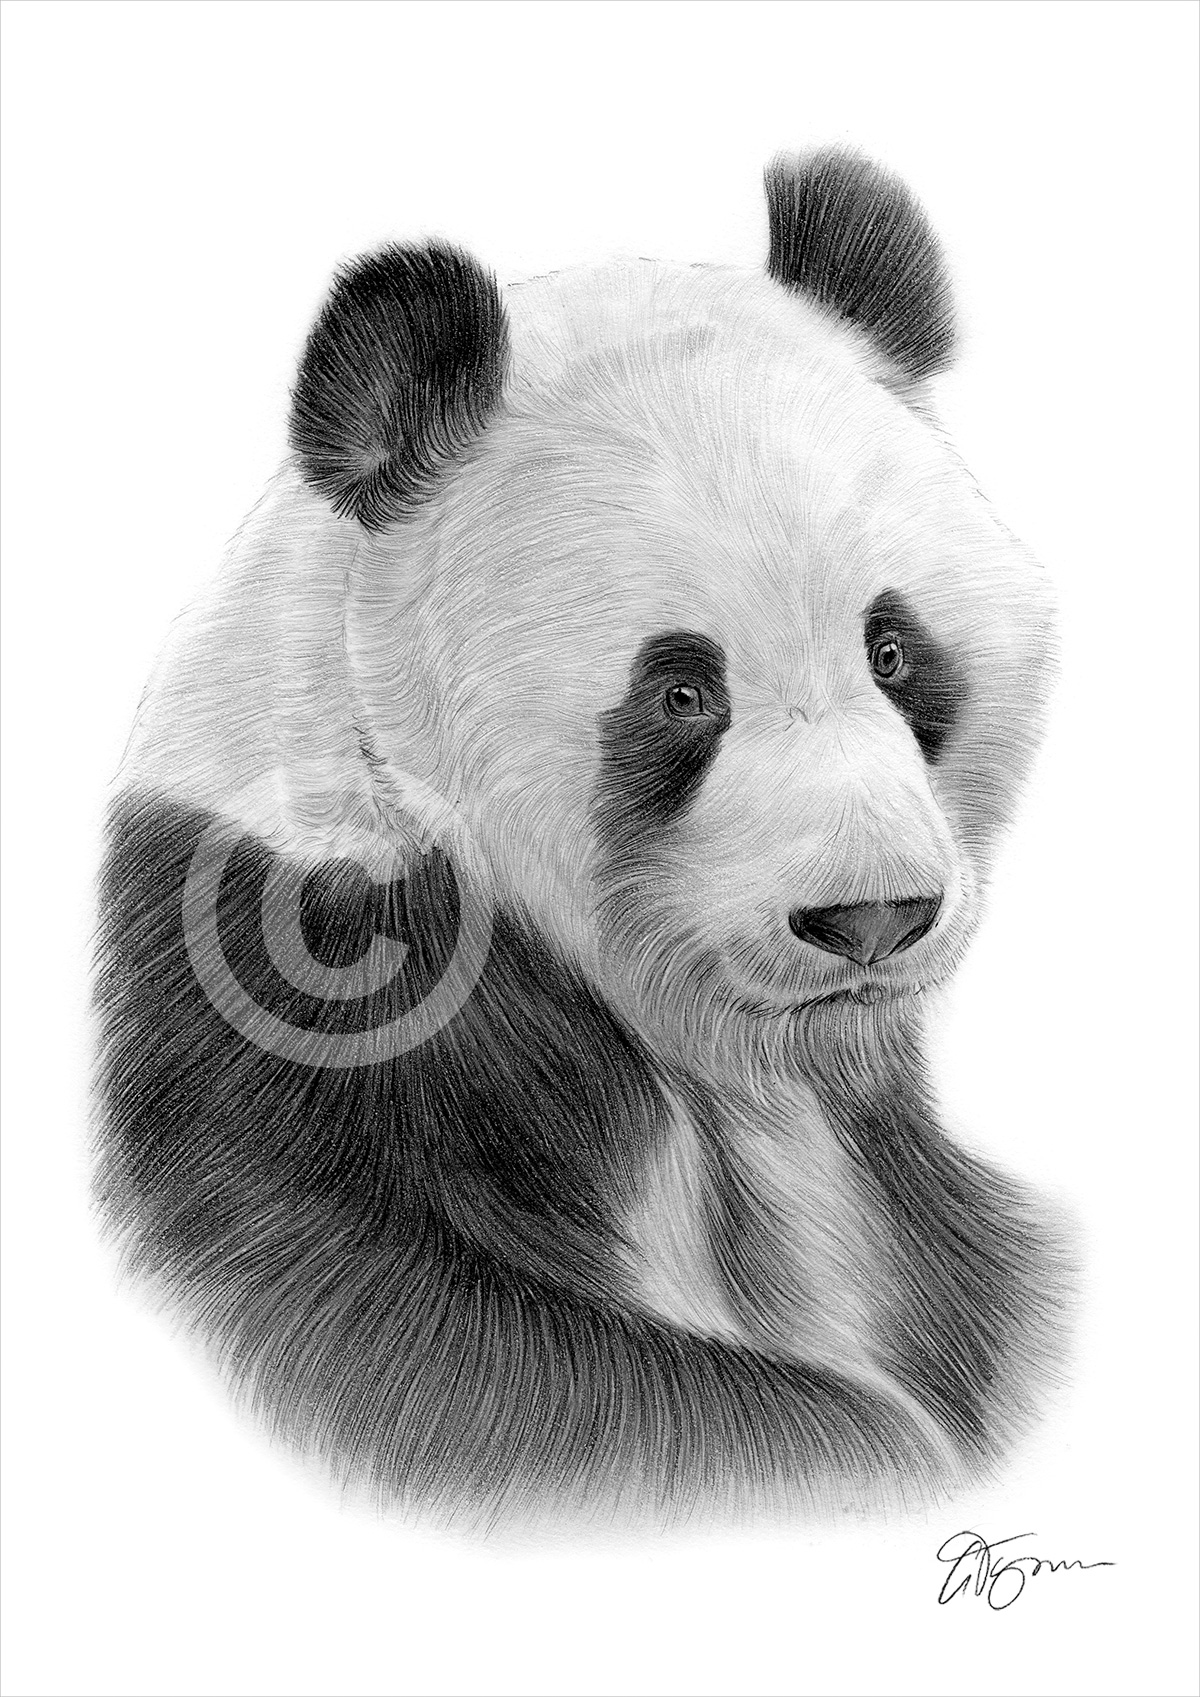 Pencil drawing of a giant panda by artist Gary Tymon